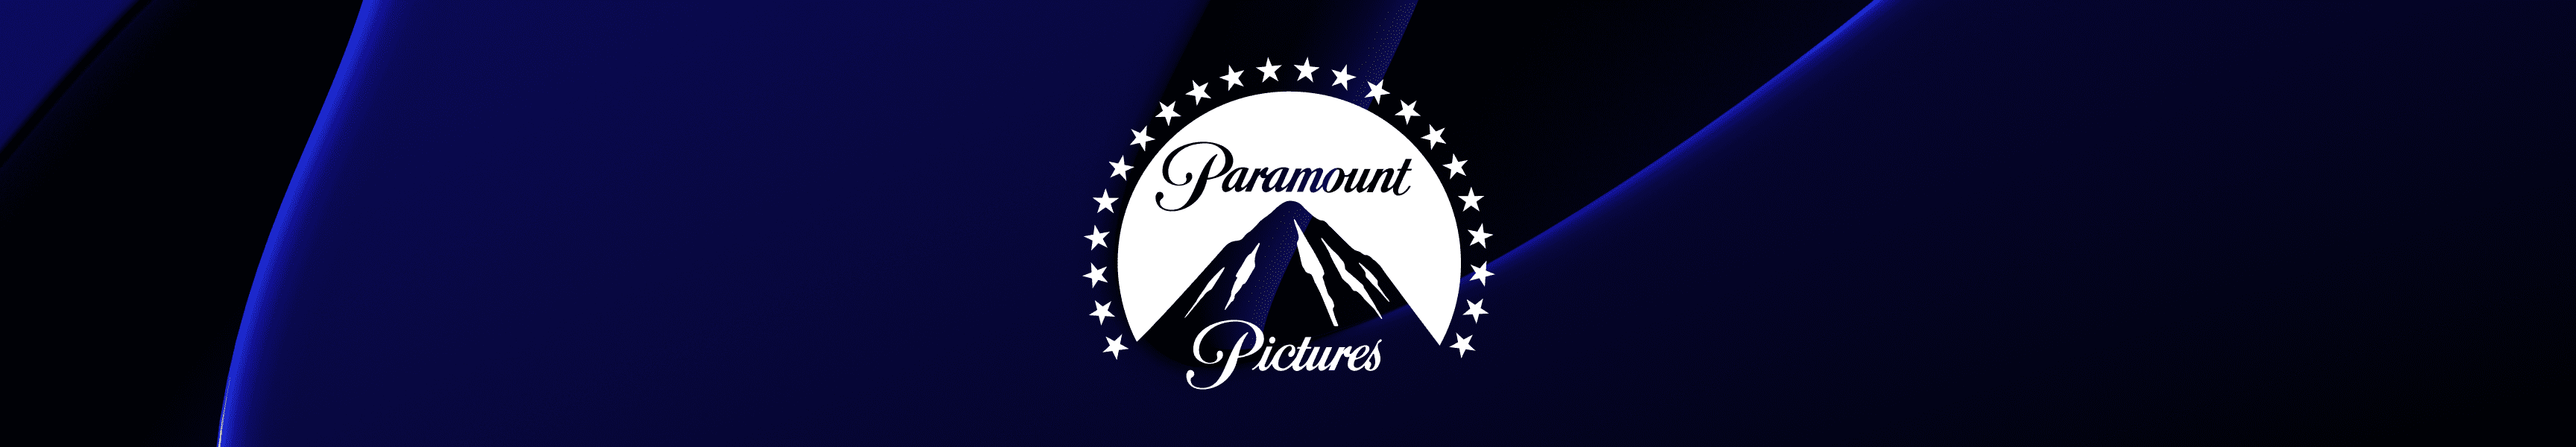 Paramount Pictures Journaux